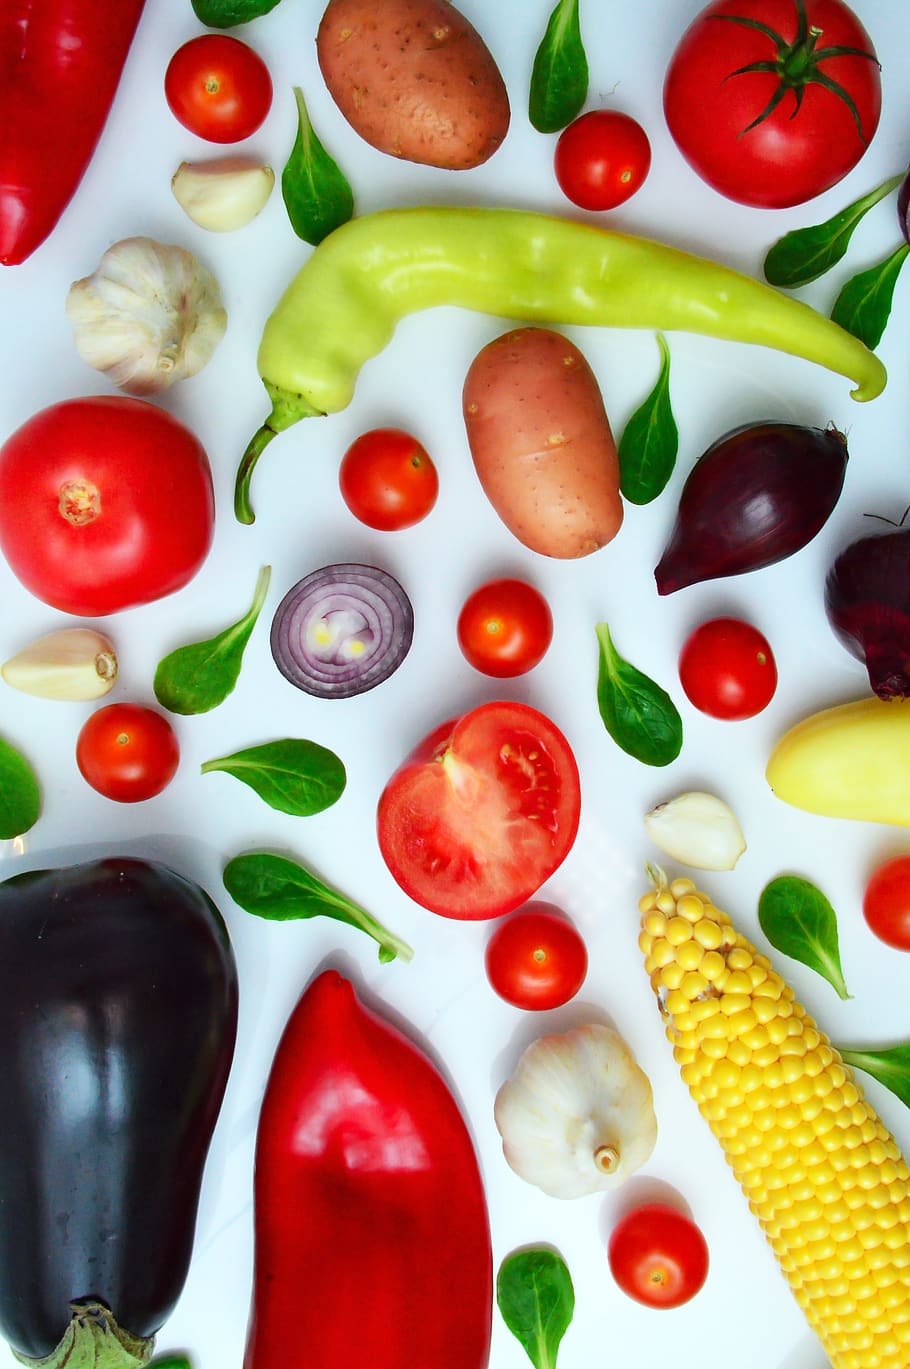 verduras, pimiento, cebolla de tomate gokhagyma, púrpura, vitaminas, vegetariano, alimentos, saludable, crudo, verde